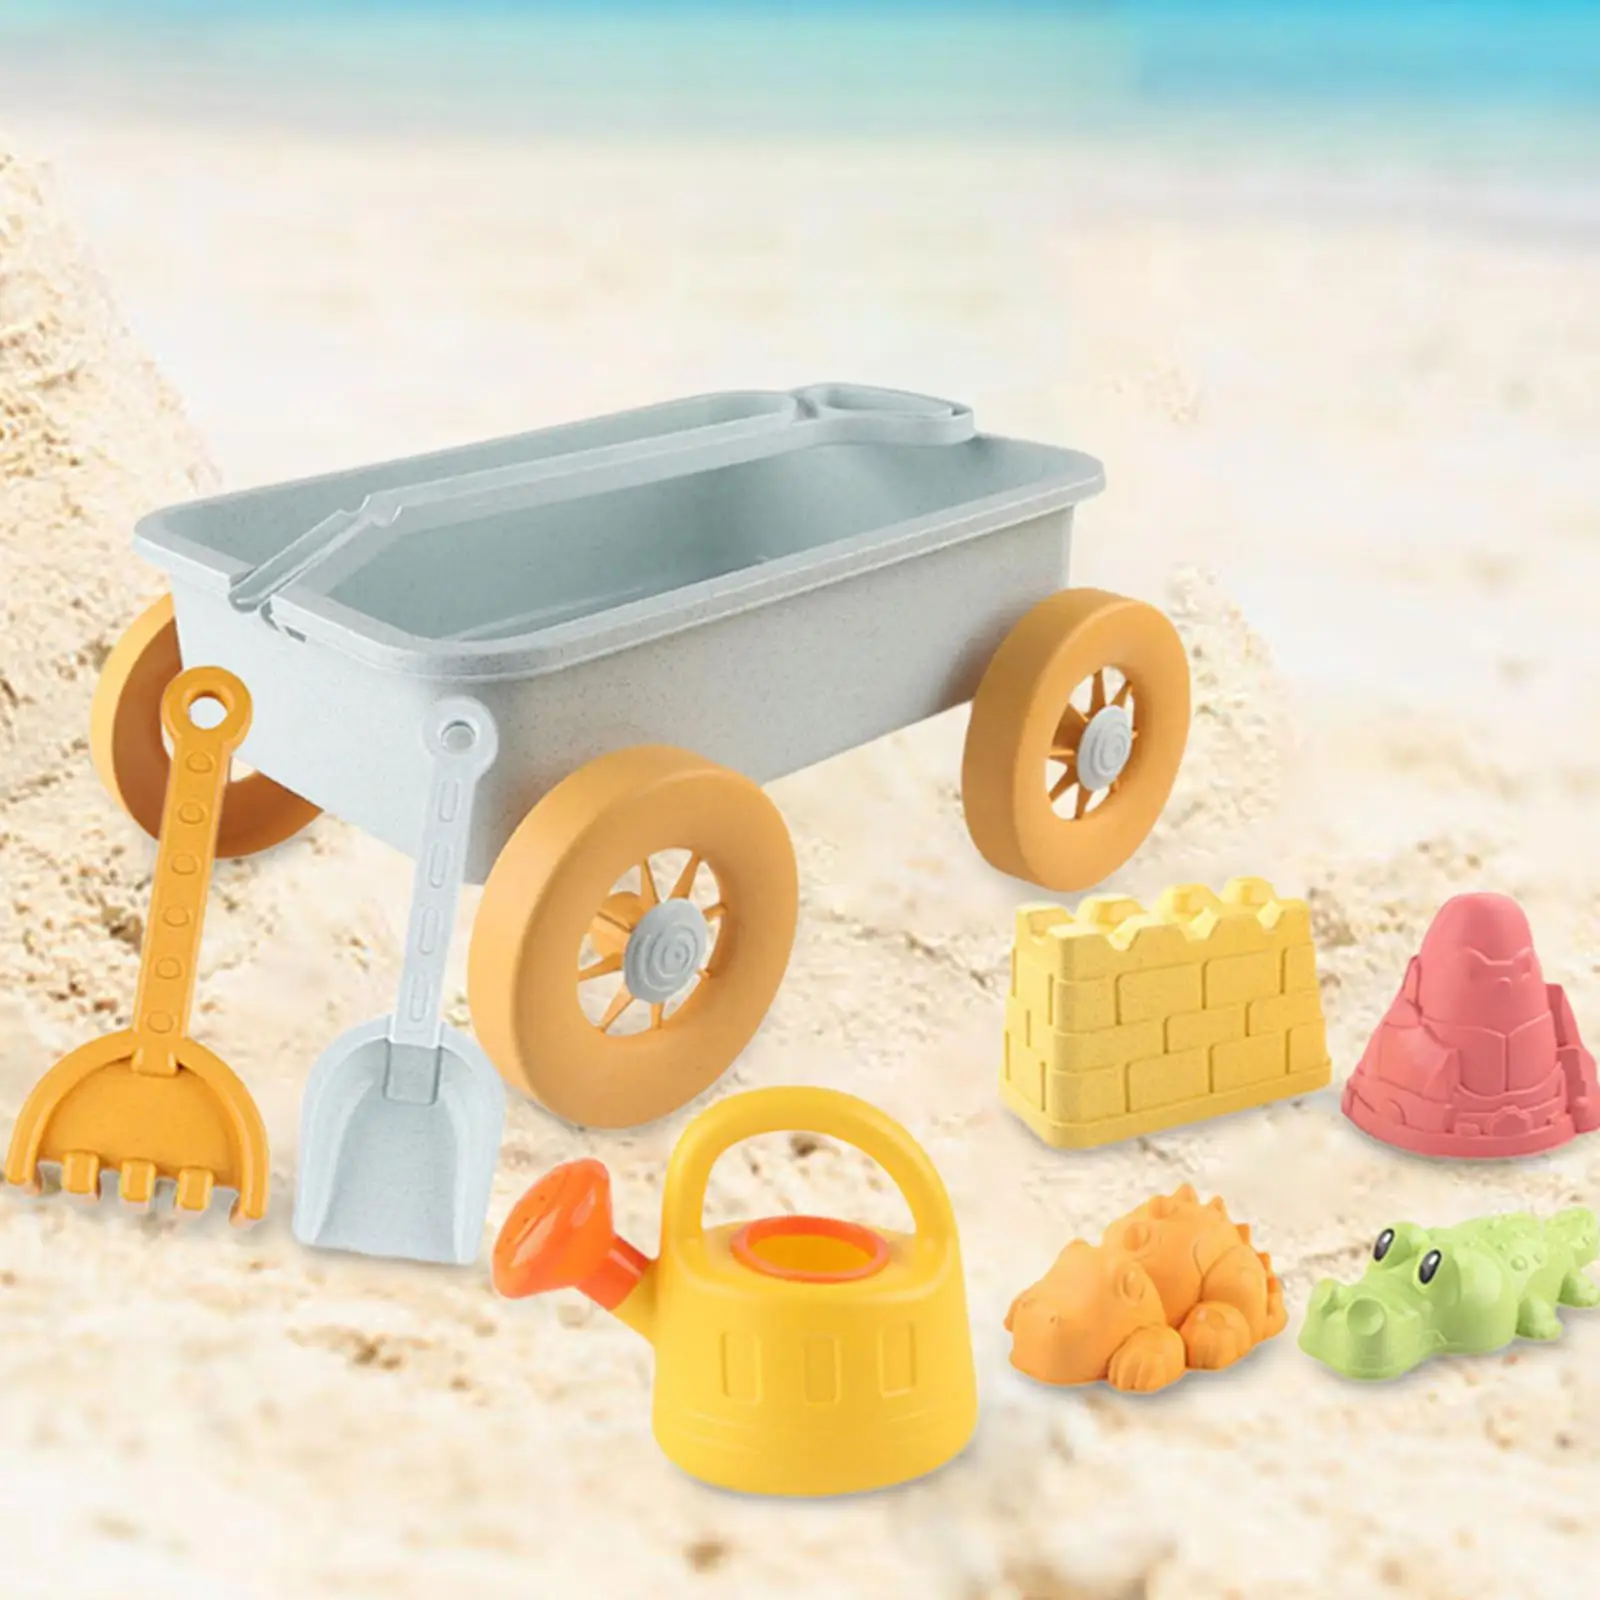 8x Sand Castle Beach Toys Outdoor Beach Playset Sand Casting Building Castle Toys for Garden Bathtime Toy Travel Child Kids